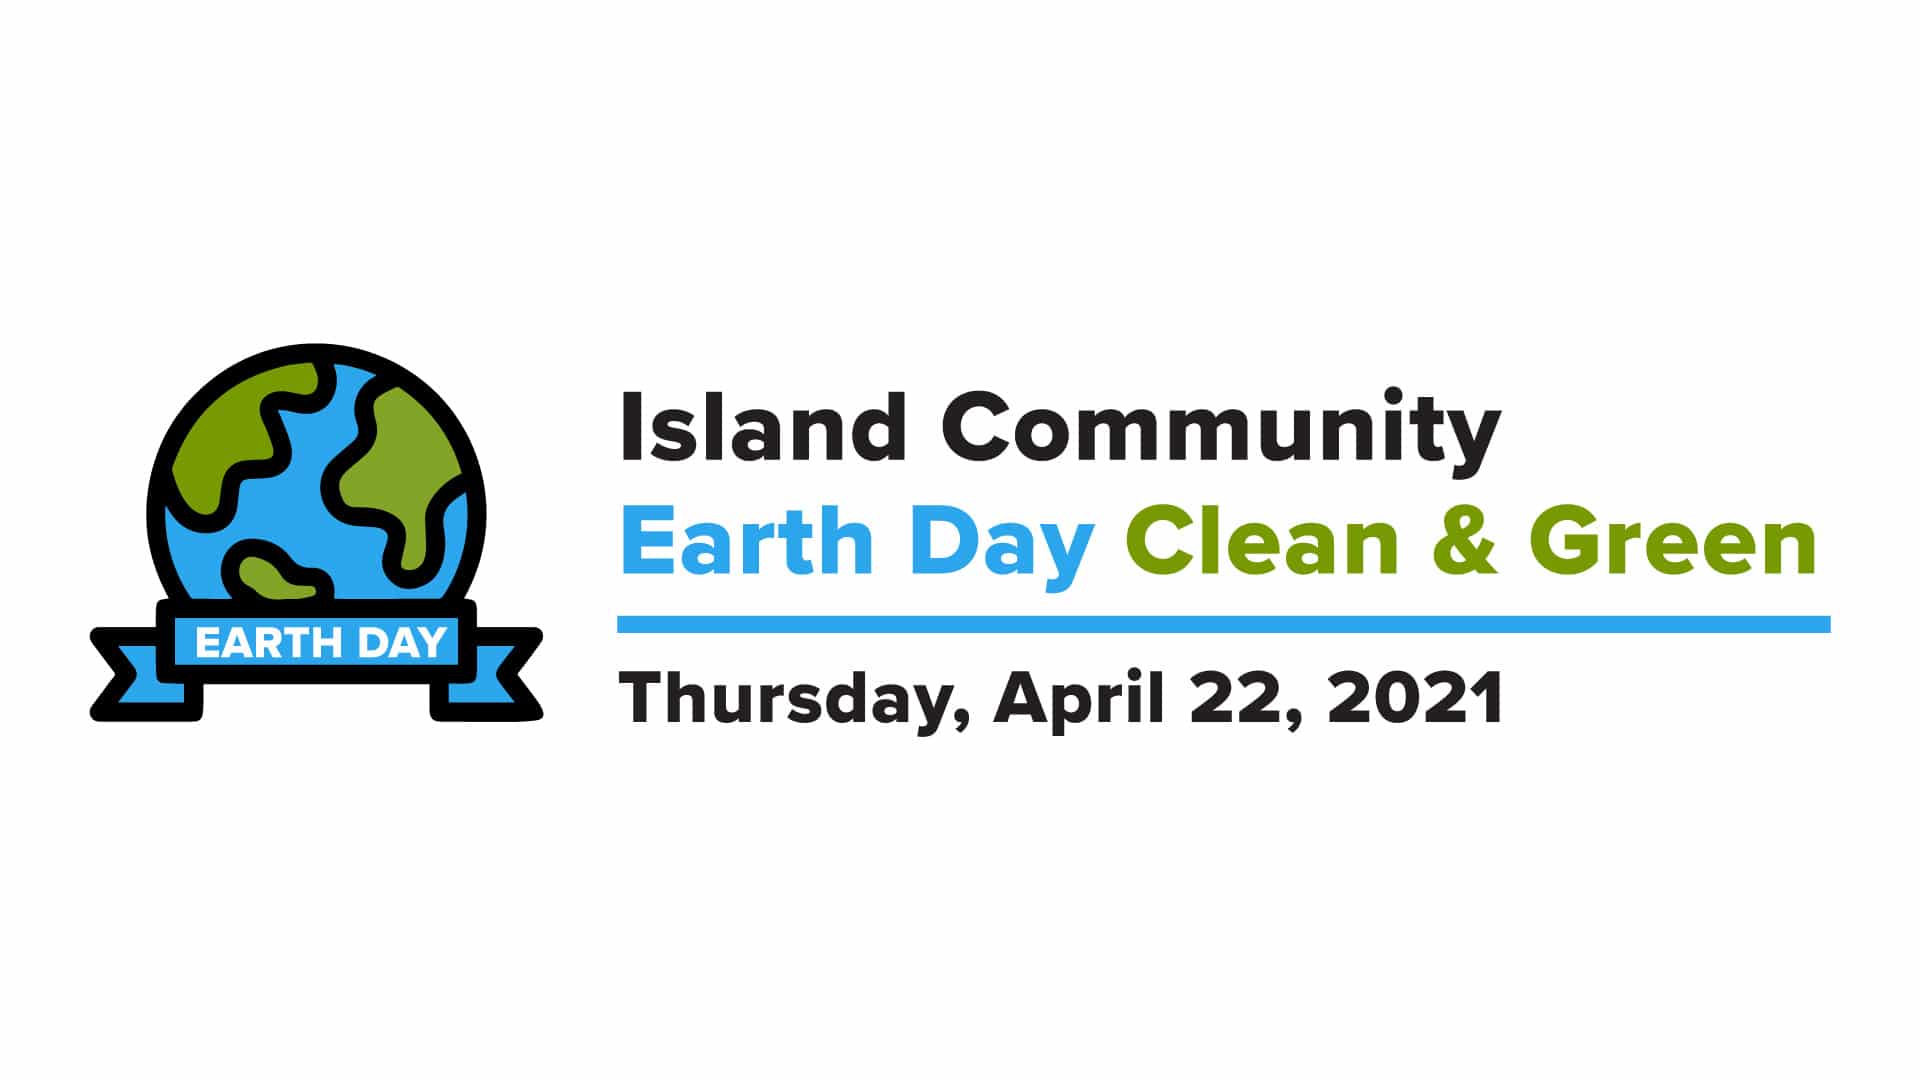 Island Community Earth Day Clean & Green